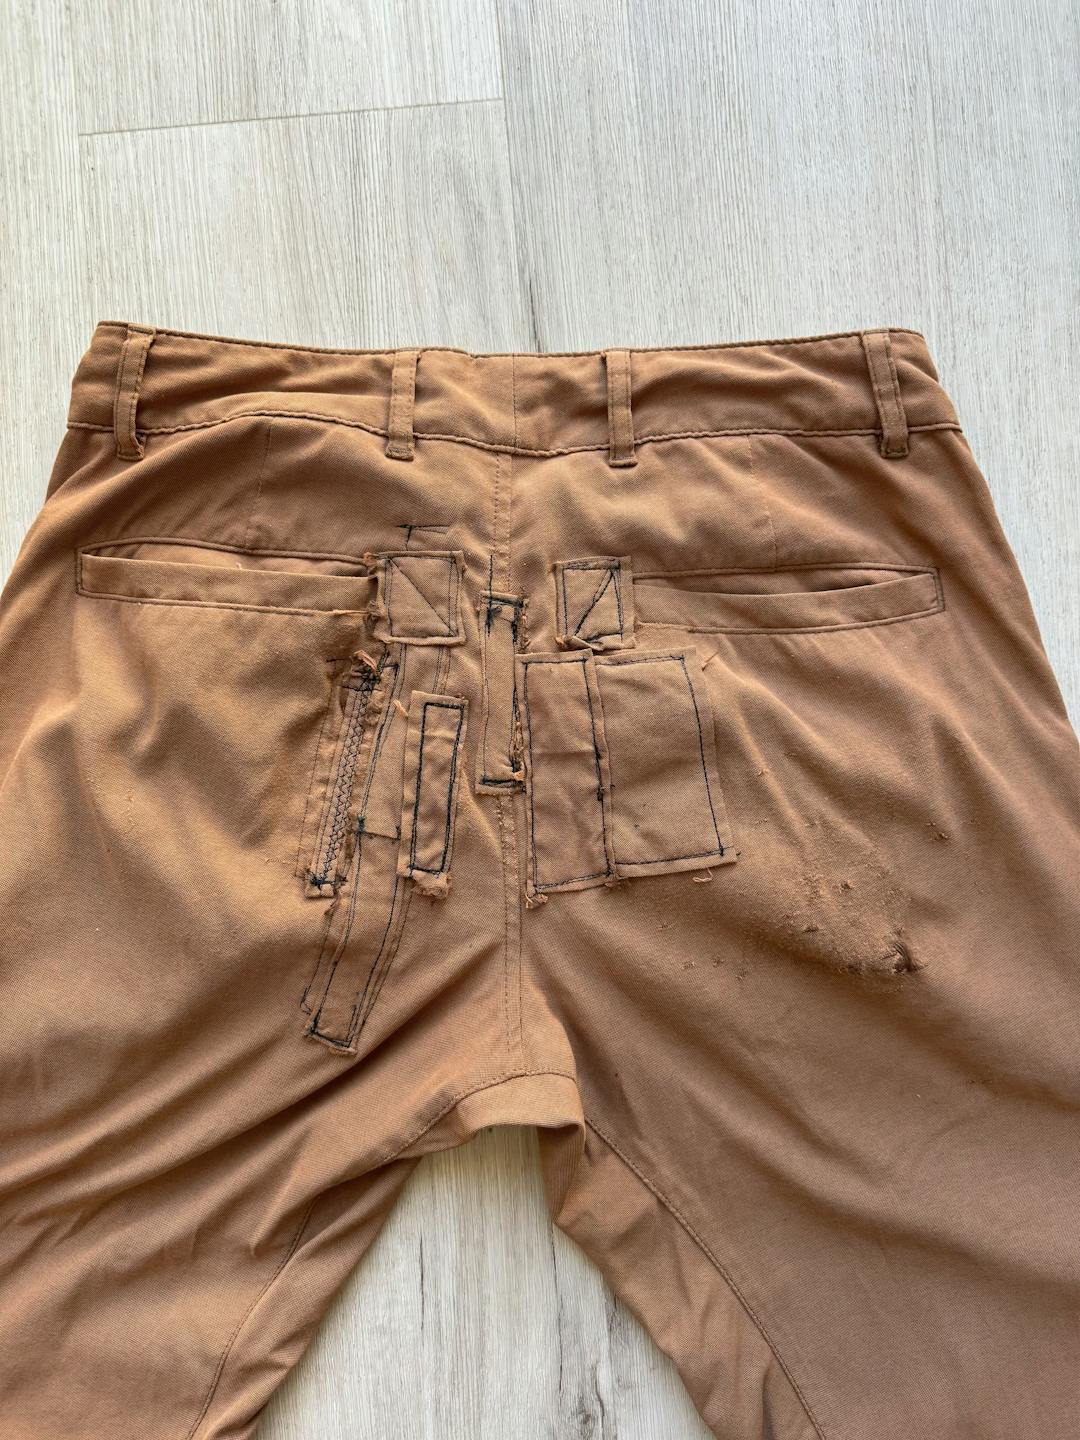 an image of a 'hobo' pants